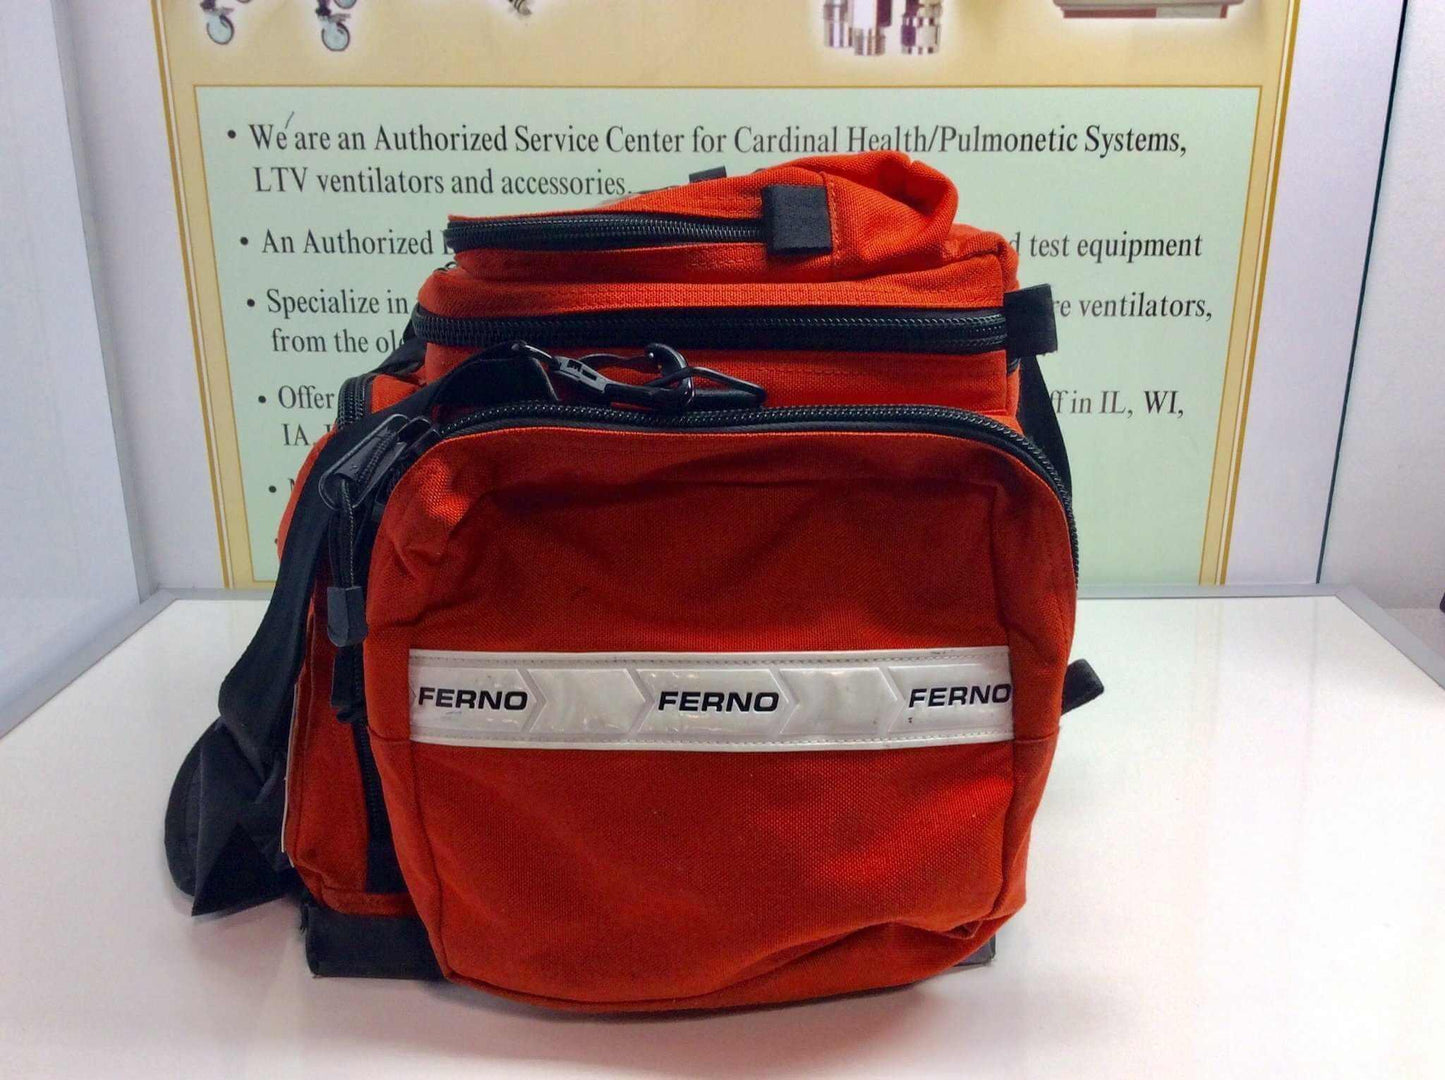 USED Ferno EMS/EMT Medic First Aid Ambulance Trauma Bag 5108 P838888-00 FREE Shipping - MBR Medicals